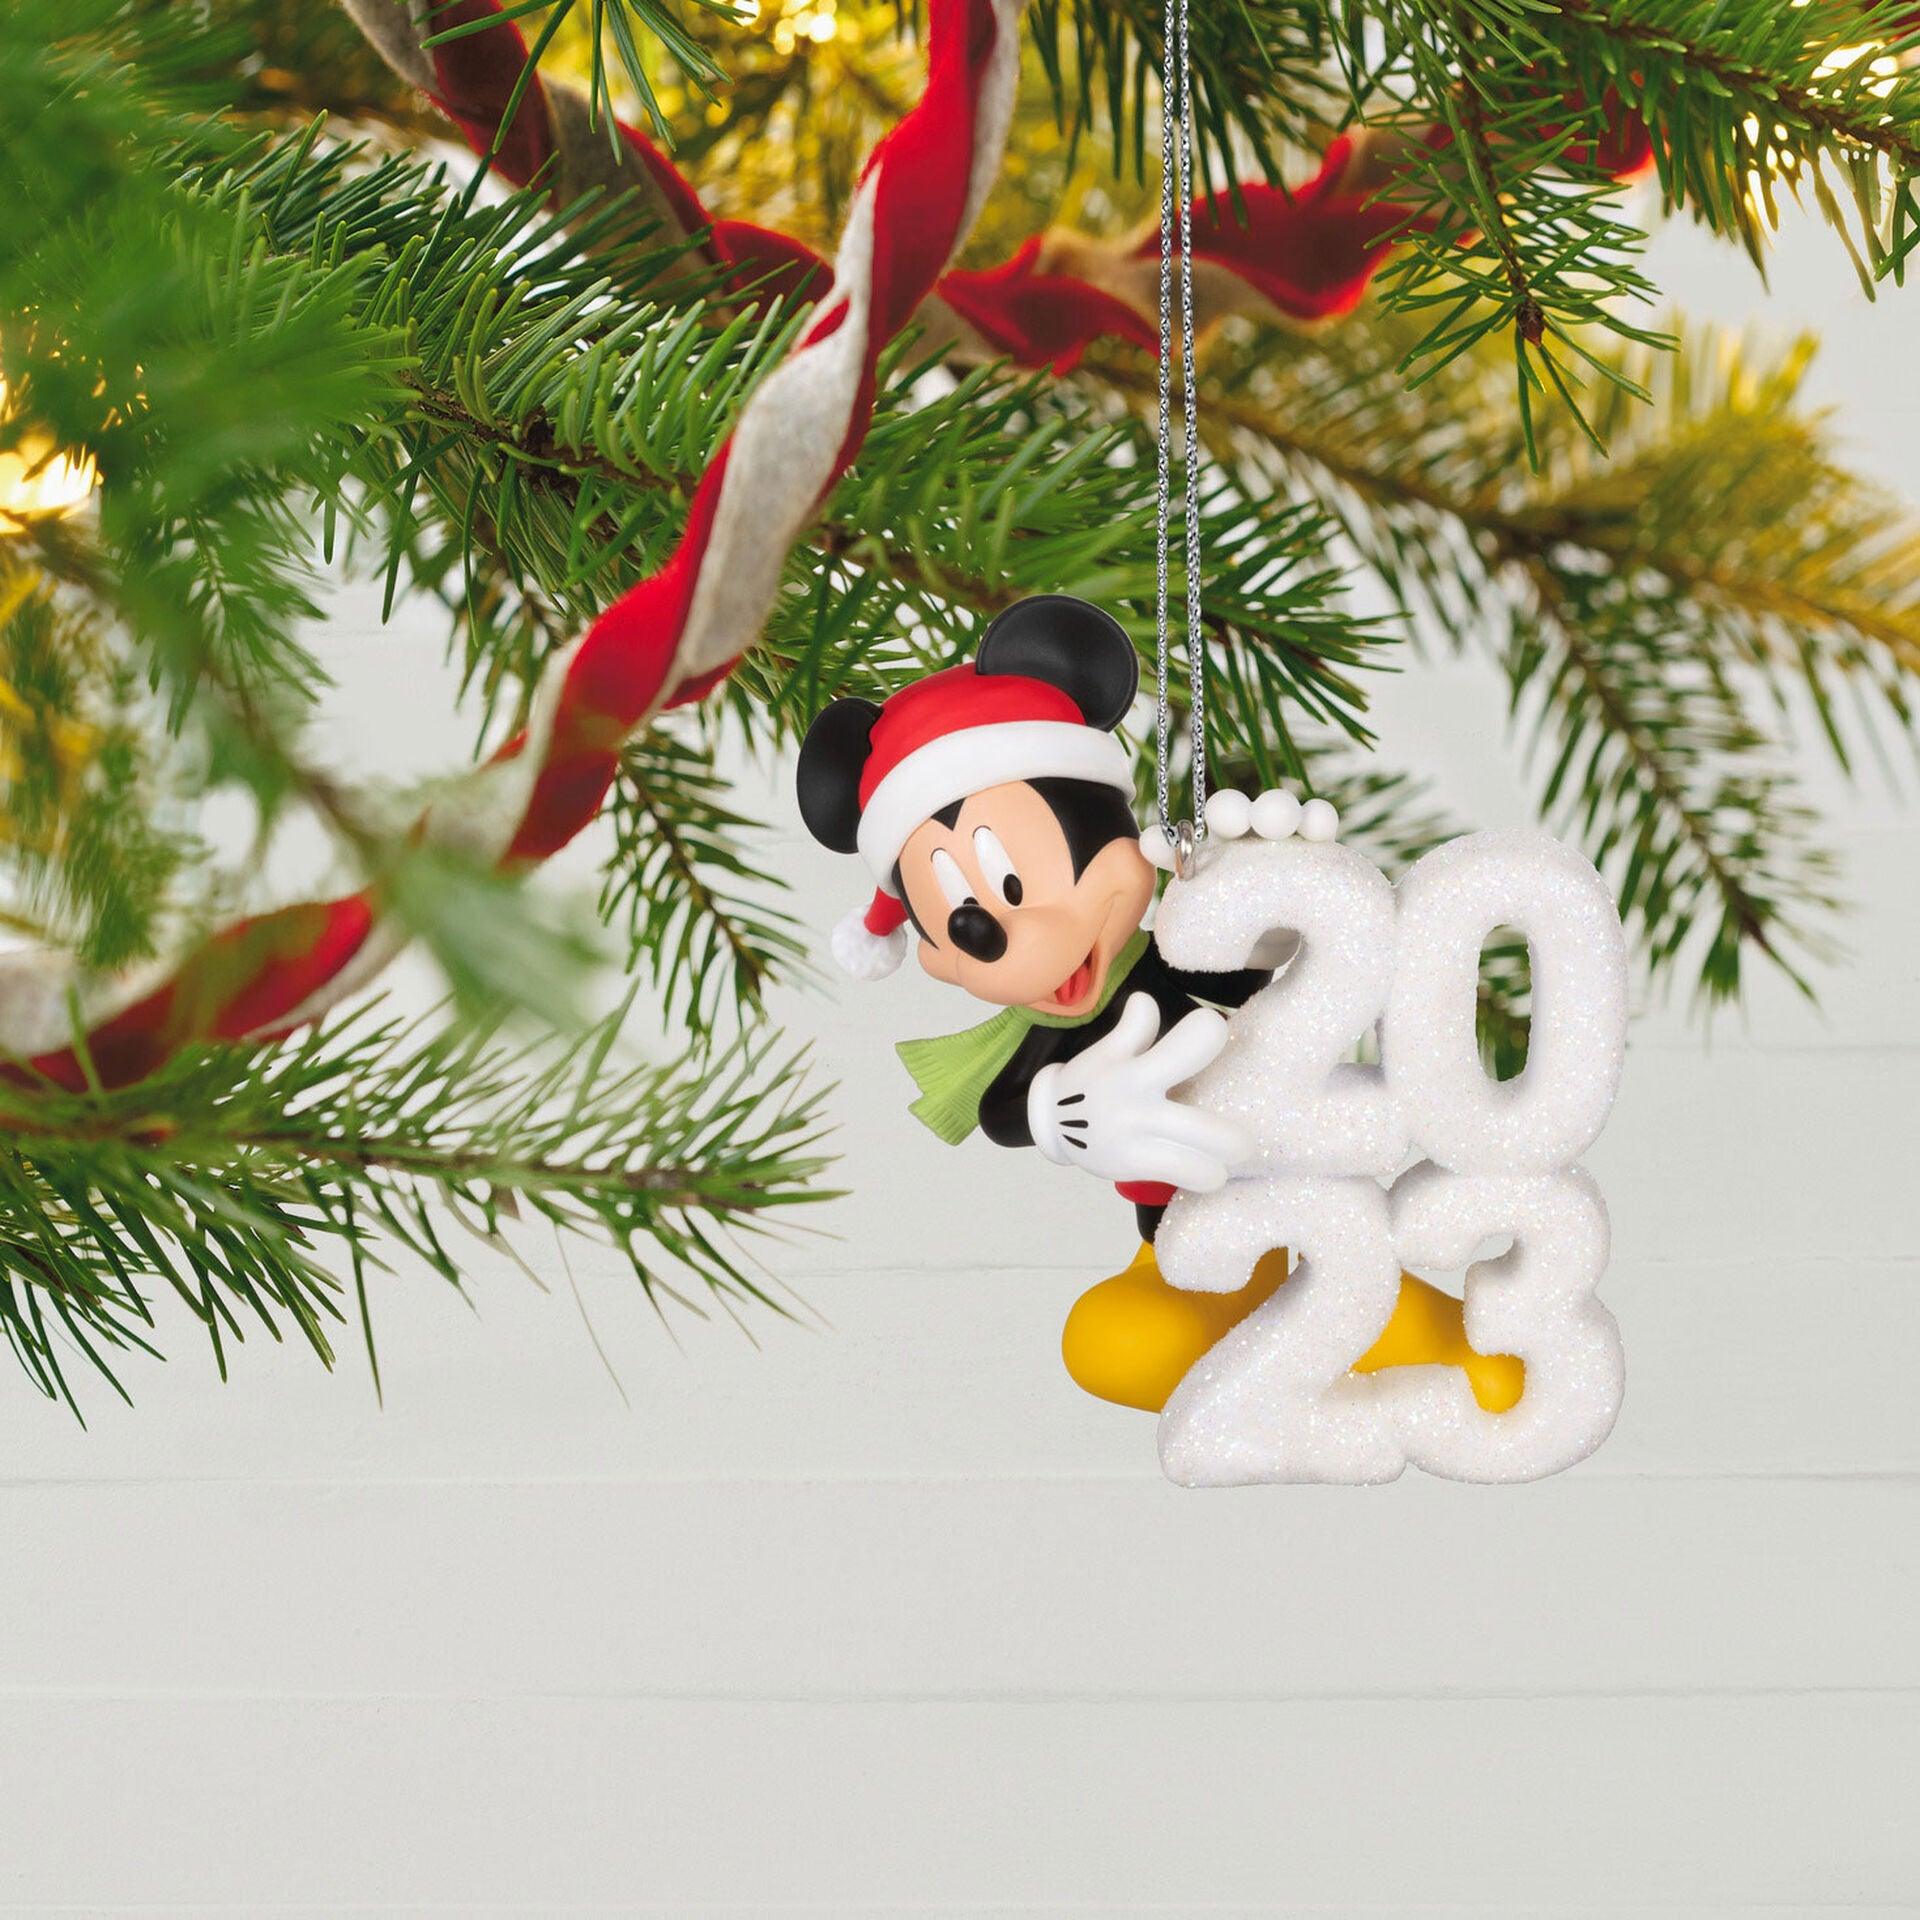 Disney Mickey Mouse A Year of Disney Magic 2023 Ornament